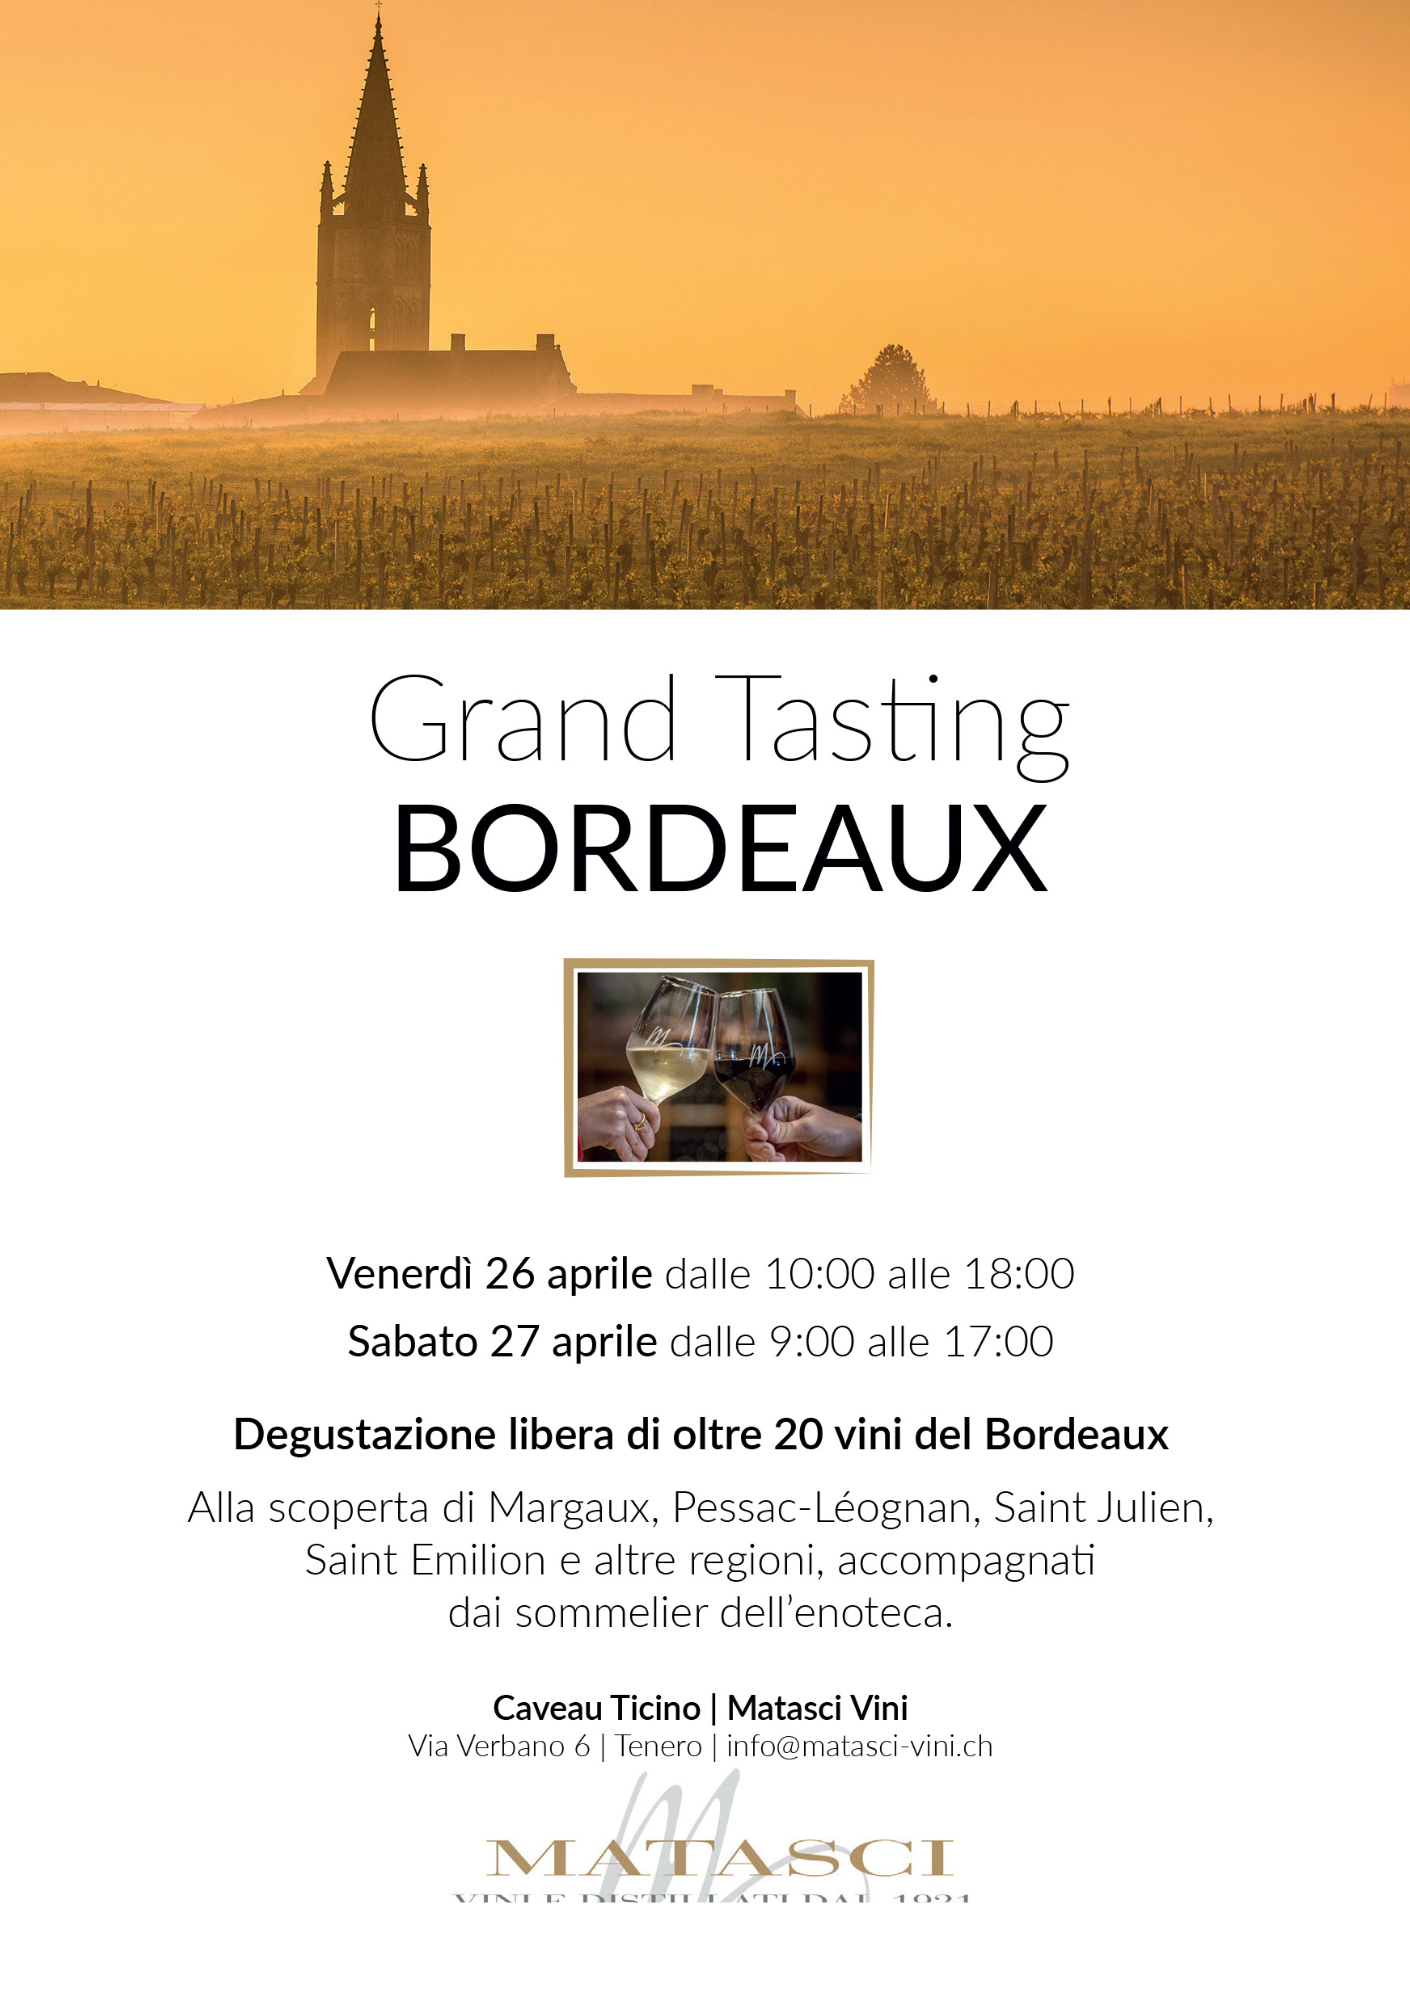 Grand Tasting Bordeaux - wine matasci 